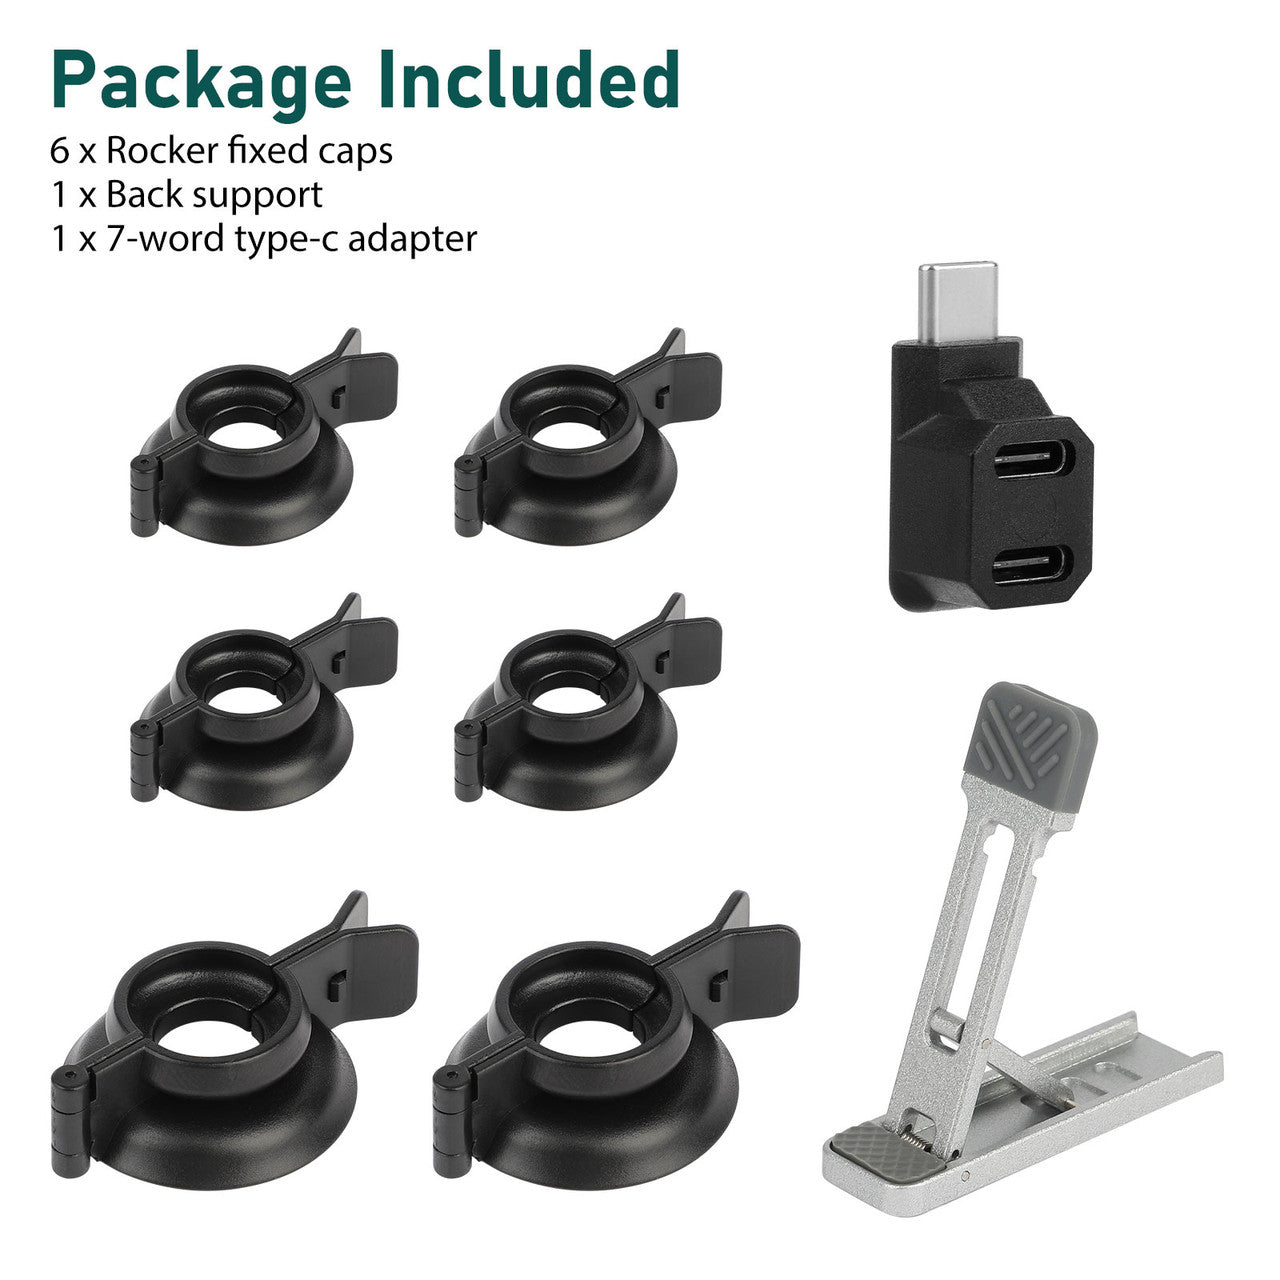 4 Packs Rocker Cap Plus Kick Stand for Steam Deck - Anti-dust Cover Dustproof Plug For Type-c Adapter Accessory Bundle Kit